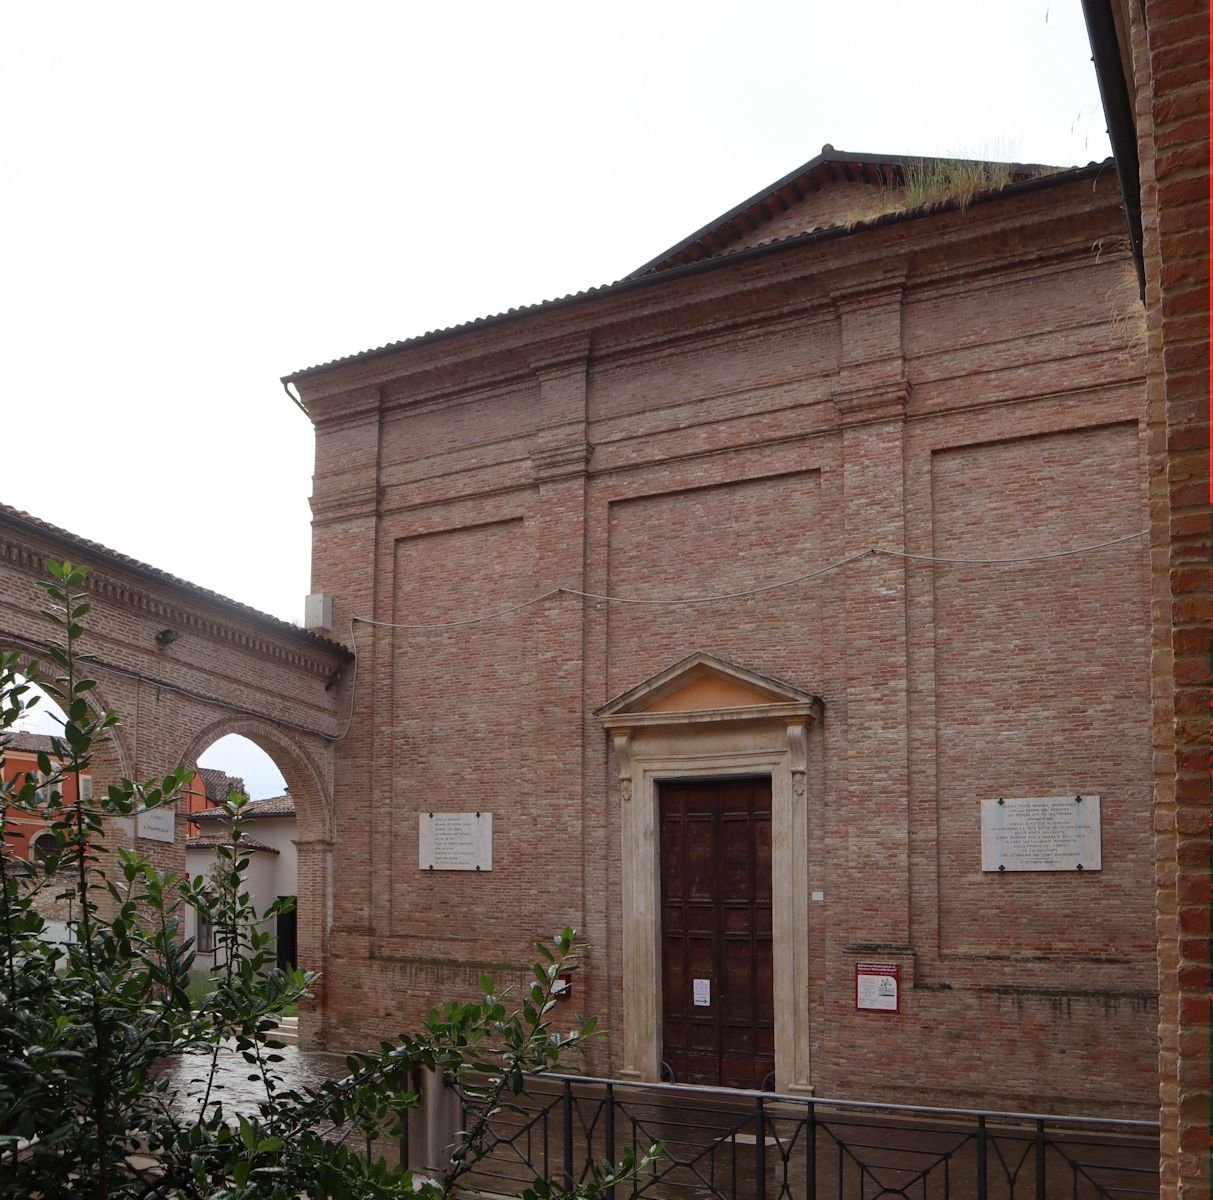 ehemalige Kirche San Francesco, heute Oratorium von Philipp Neri in Fabriano